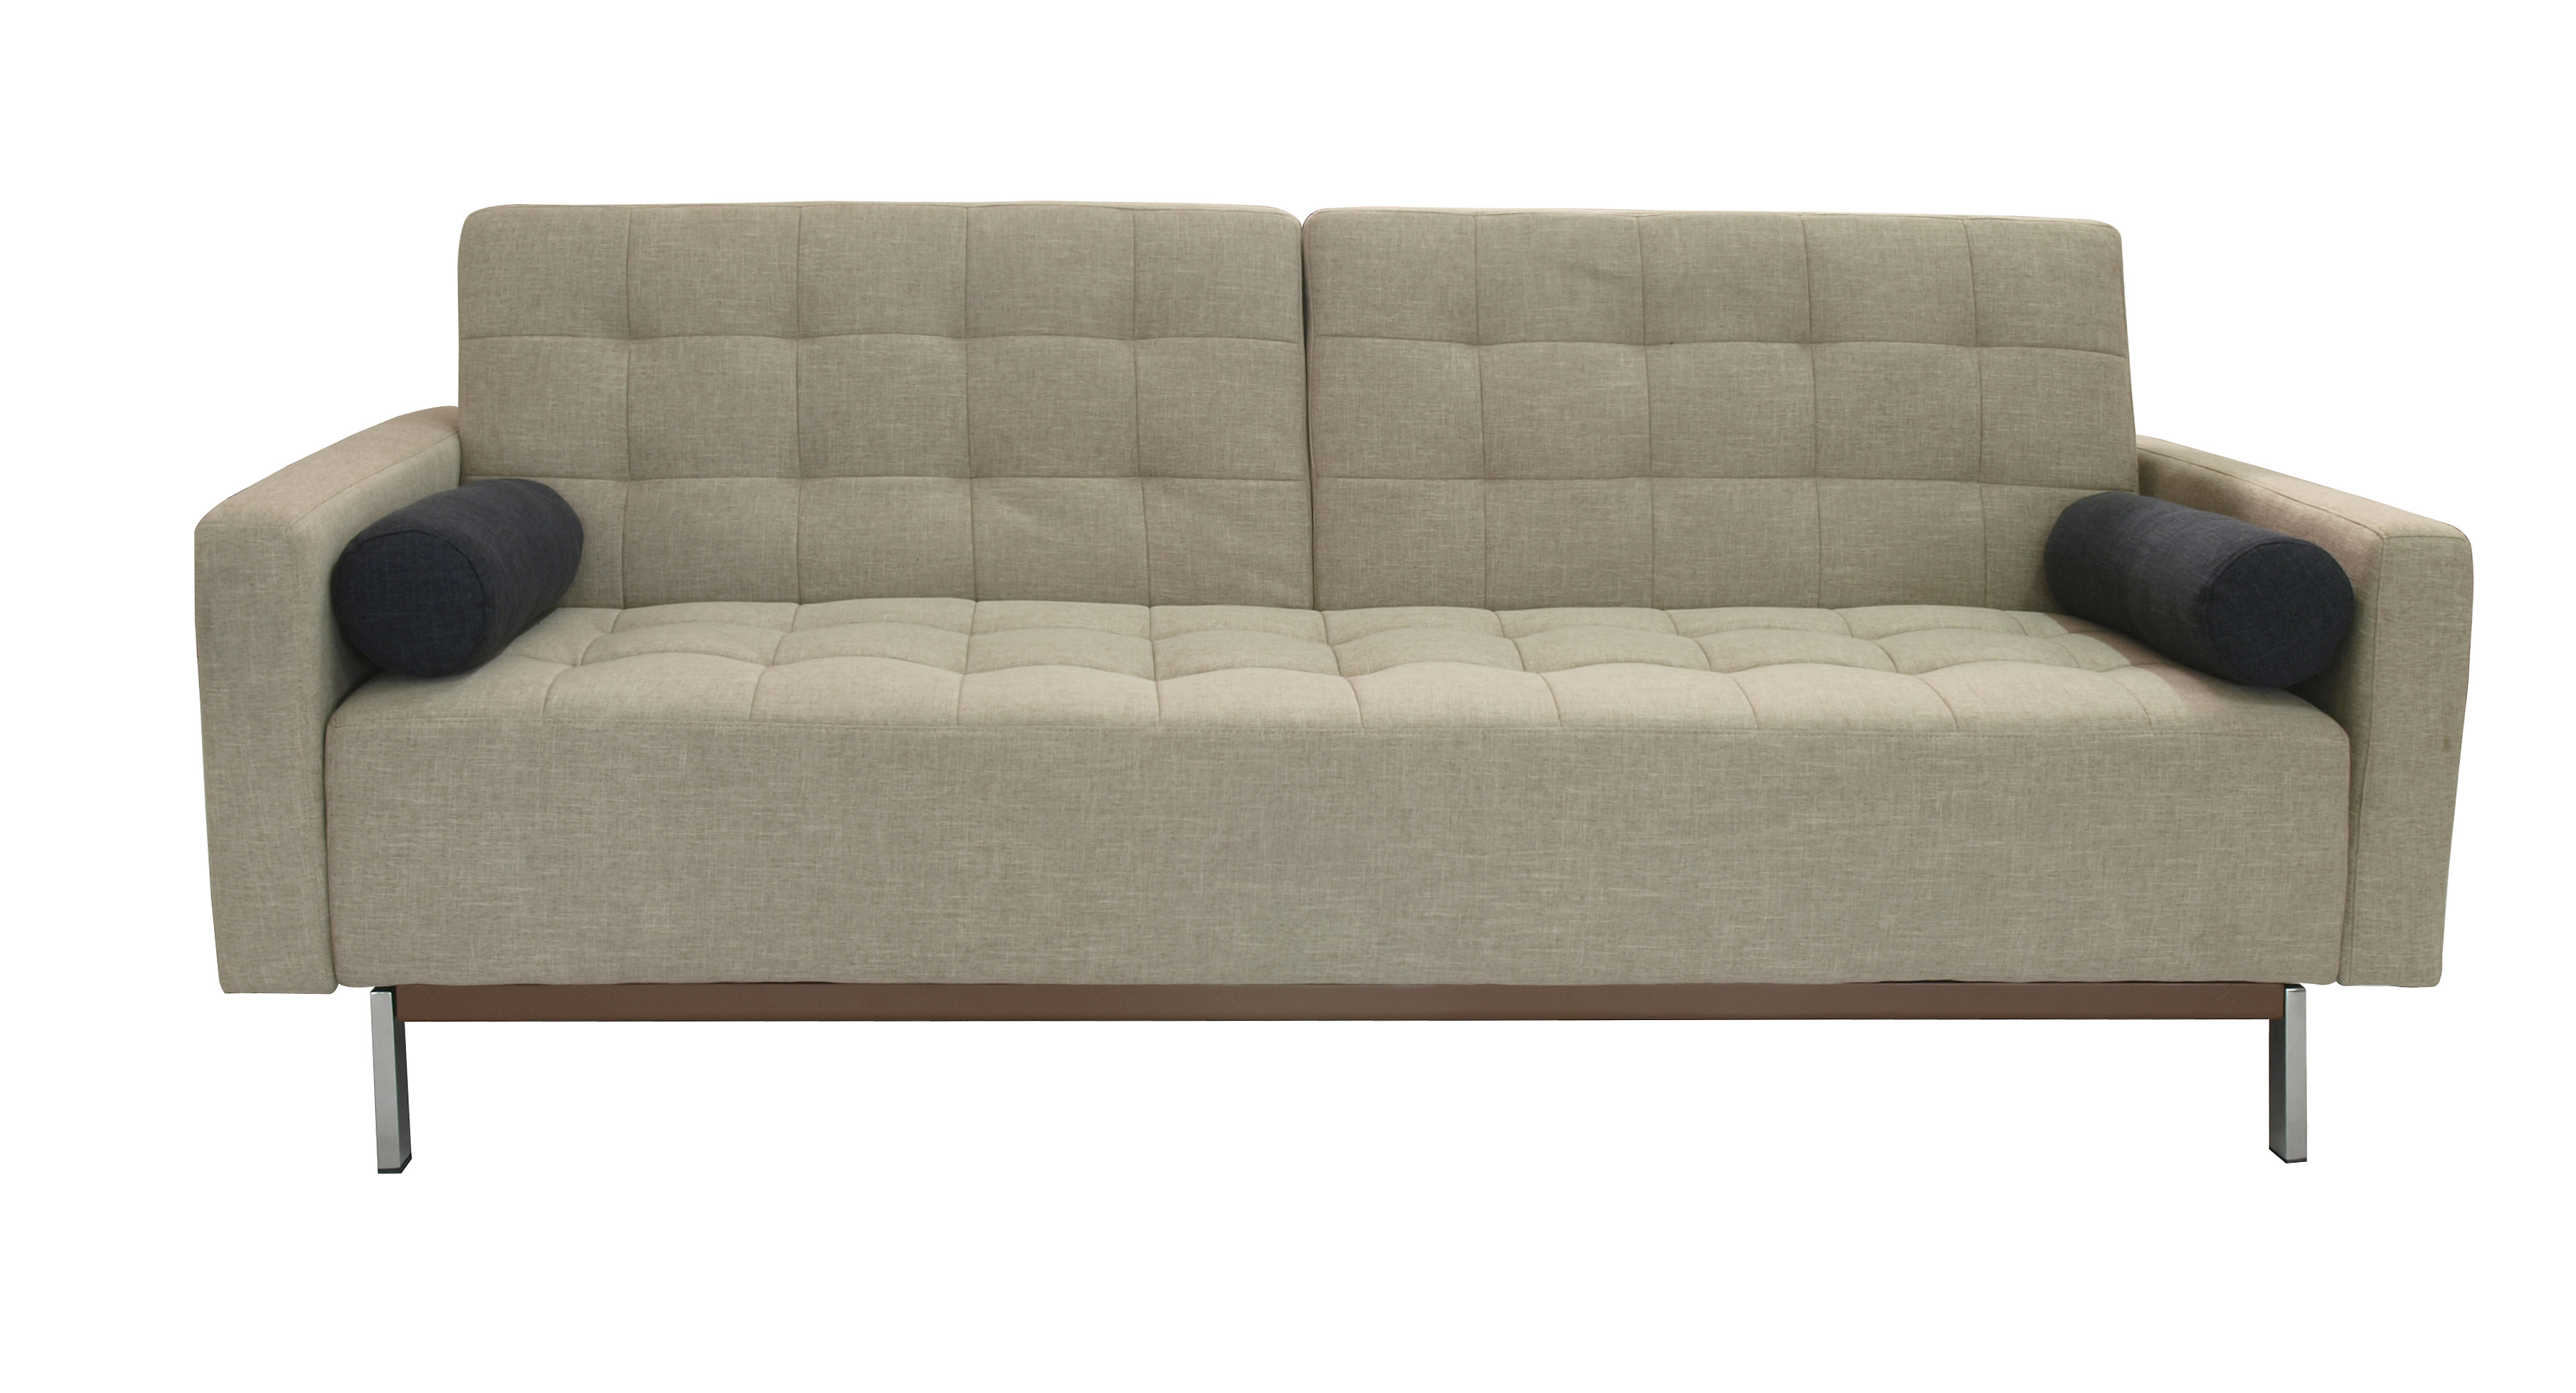 tufted fabric sofa bed